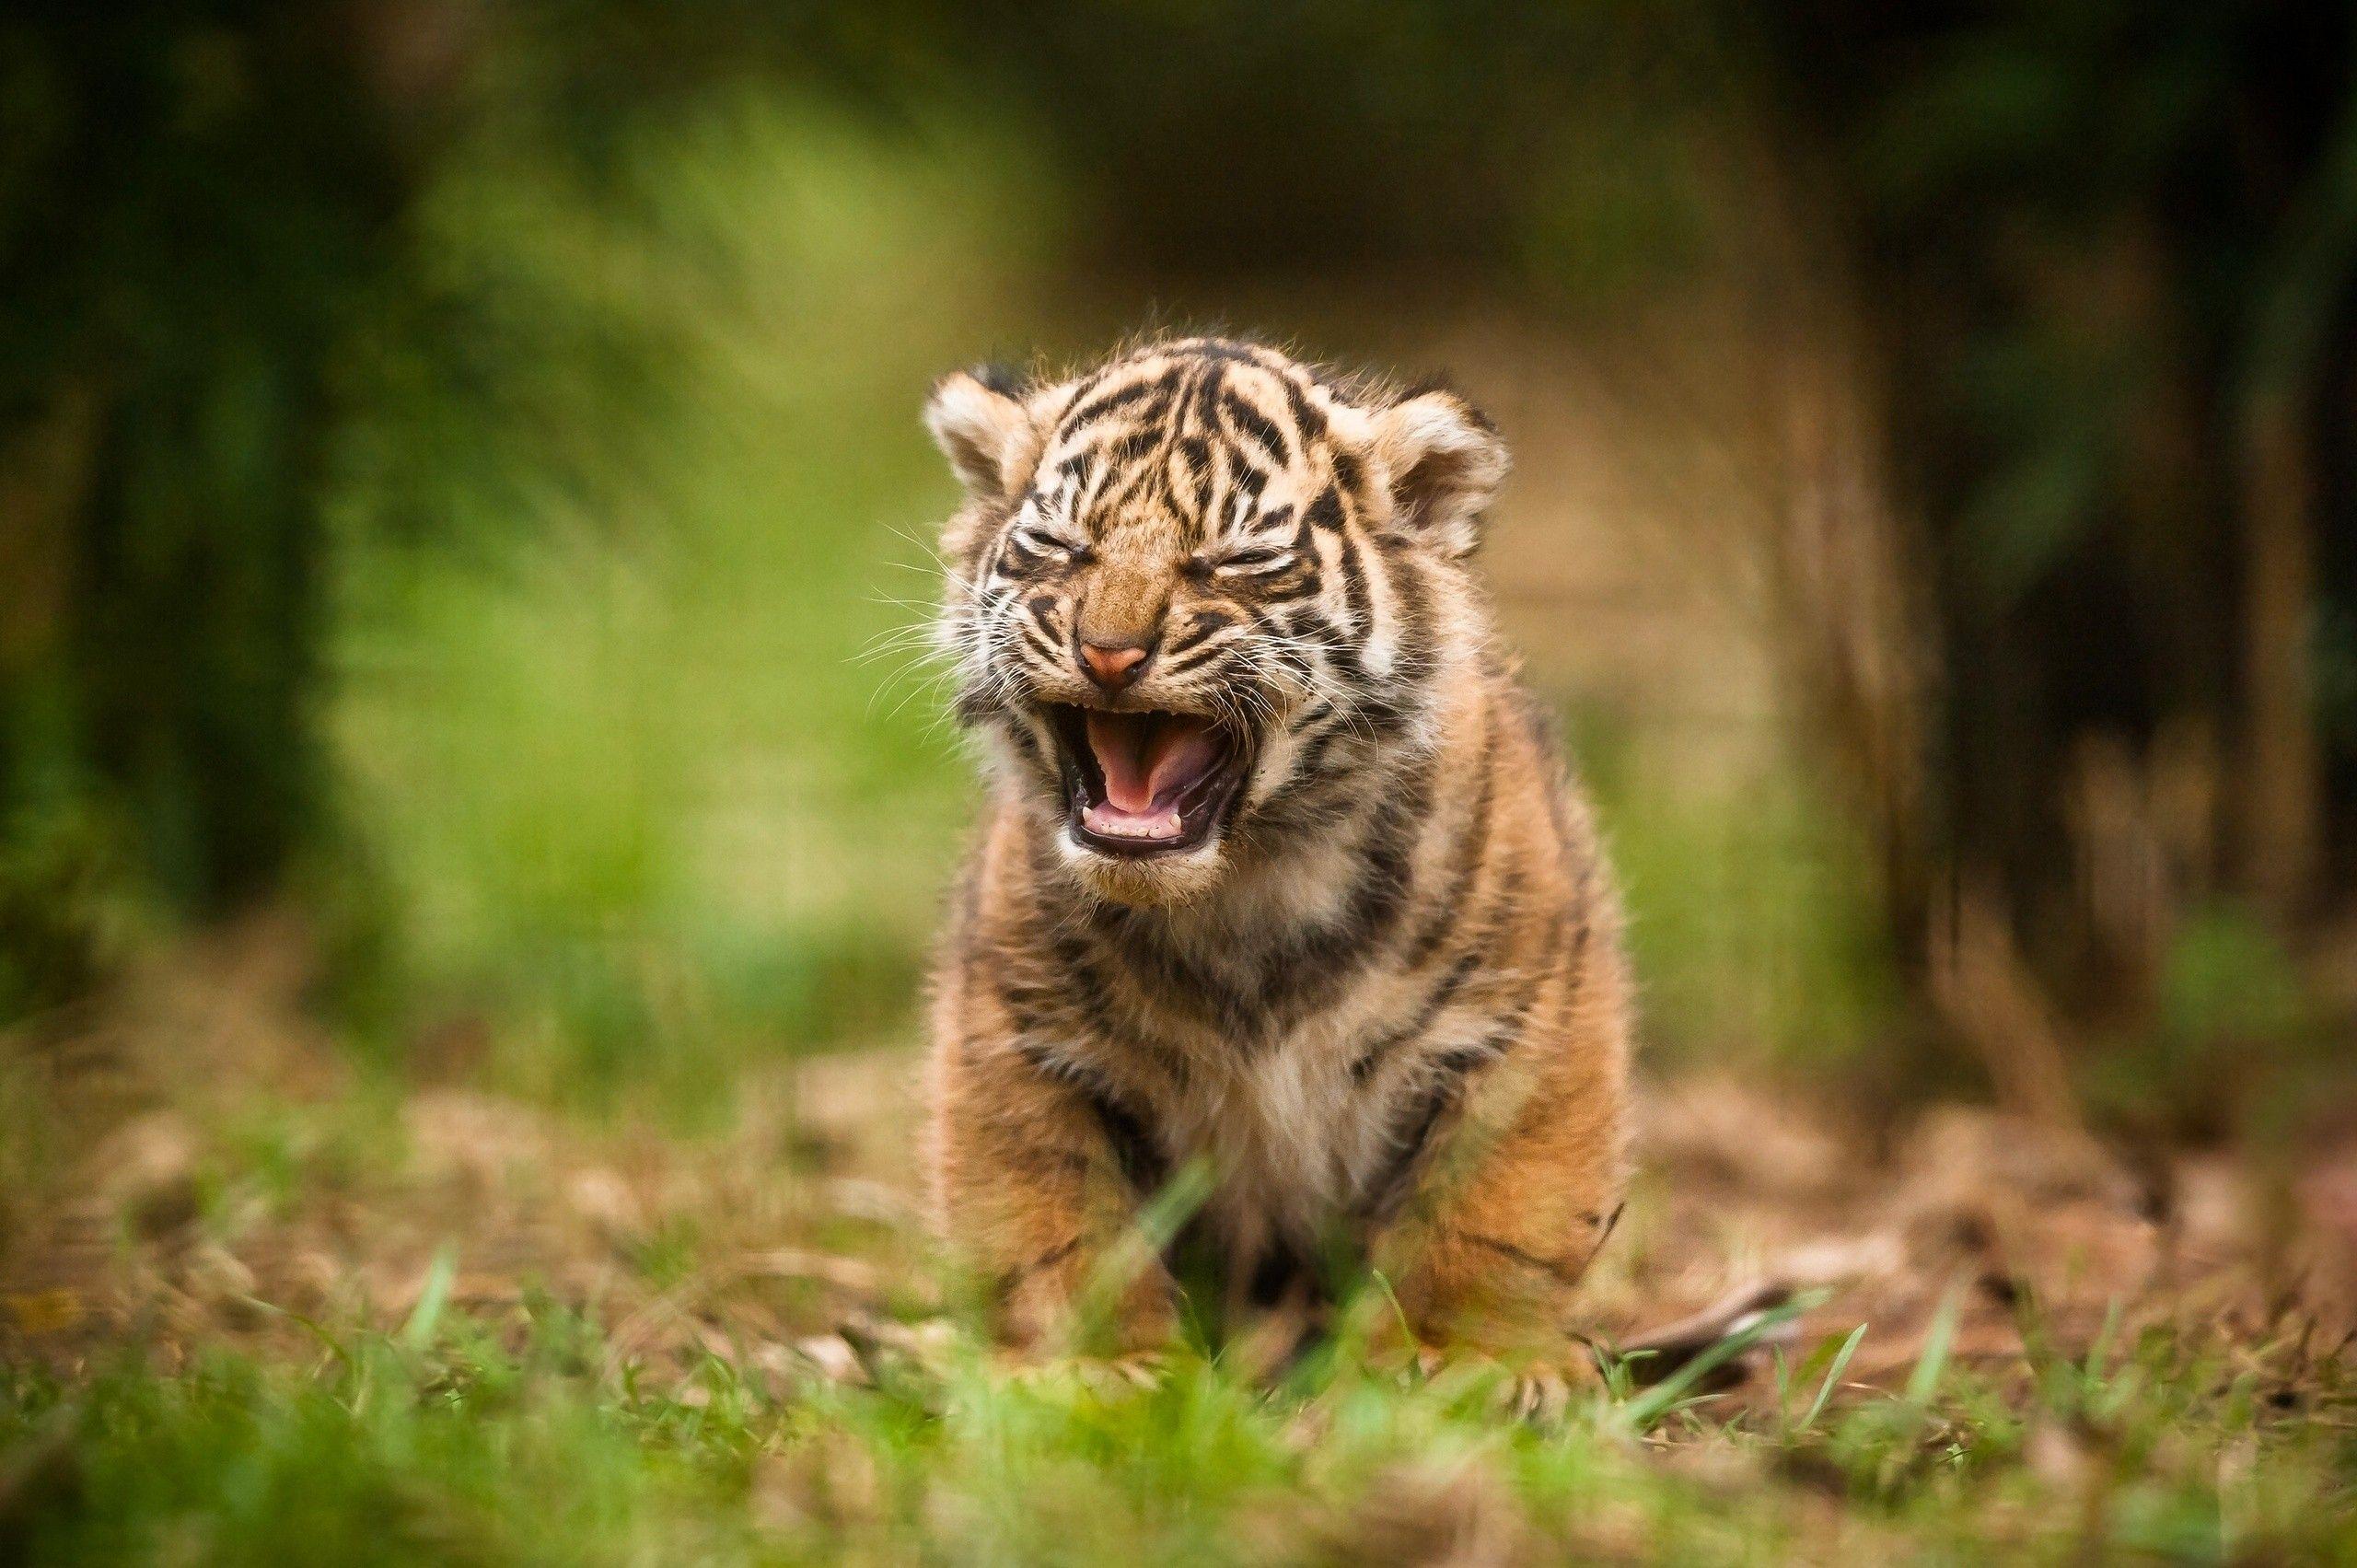 Cute Cub, HD Animals, 4k Wallpaper, Image, Background, Photo